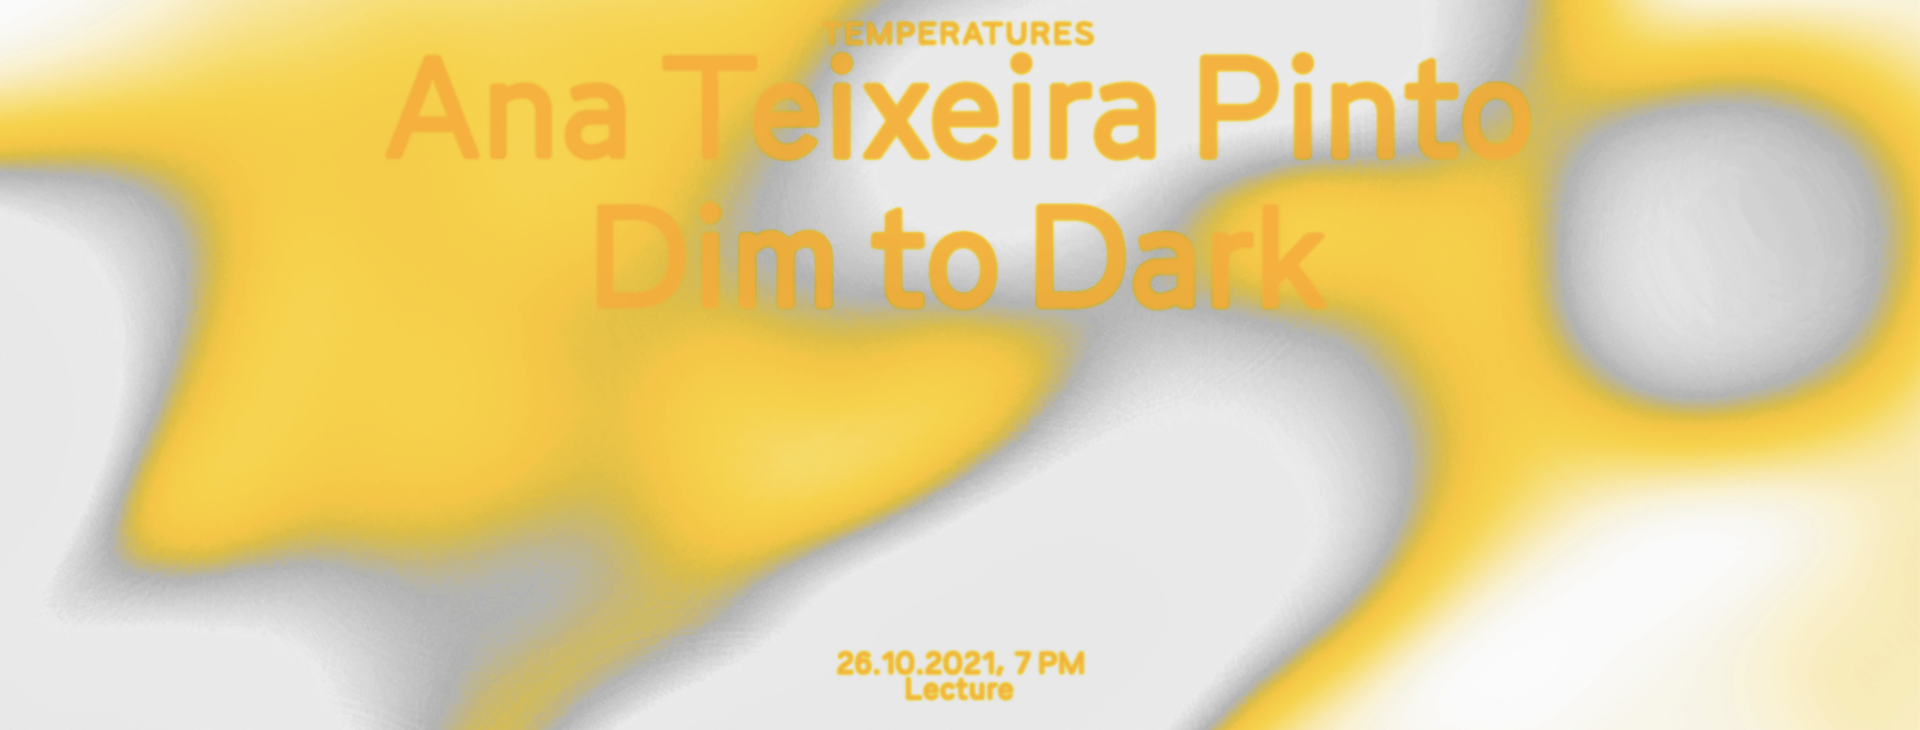 Temperatures VI: Ana Teixeira Pinto – Dim to Dark